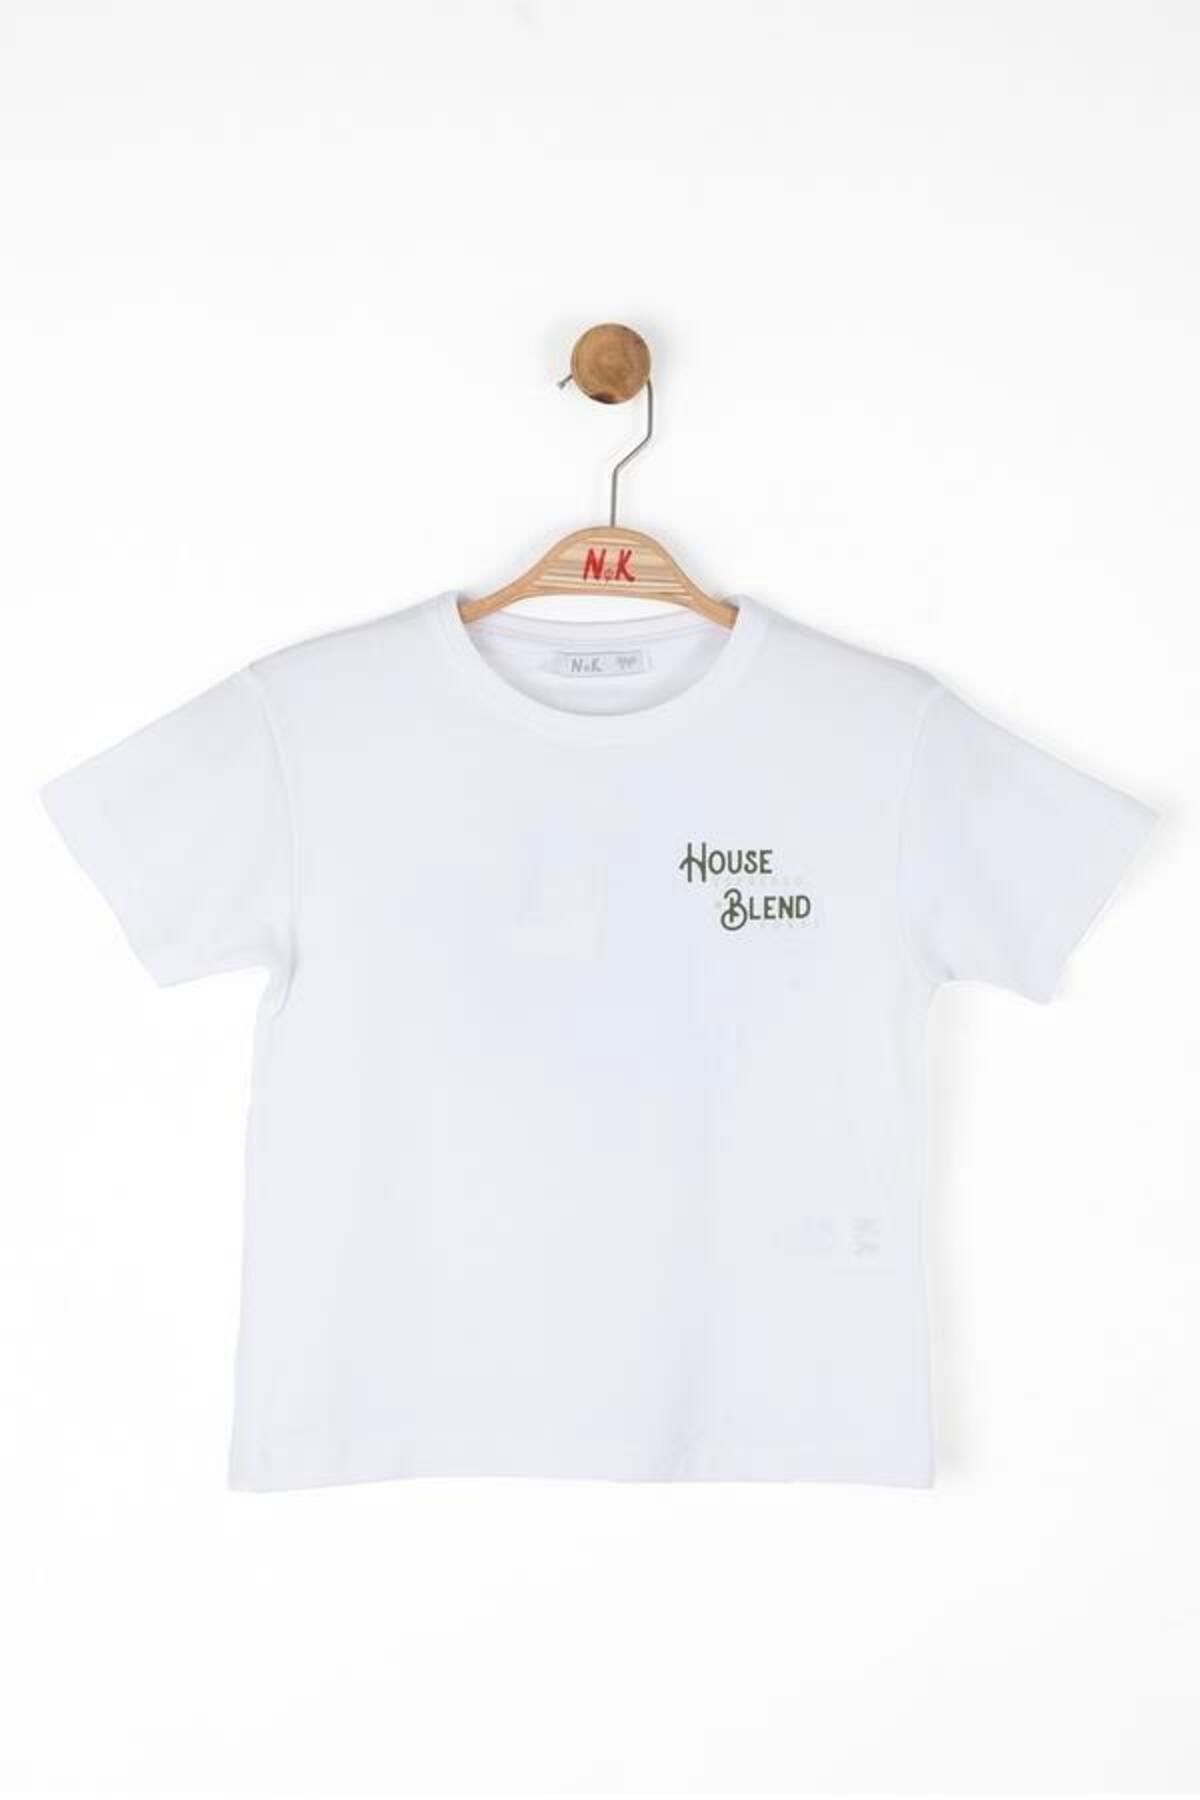 Nk Kids Paraguay Tshirt - White-green 4/8